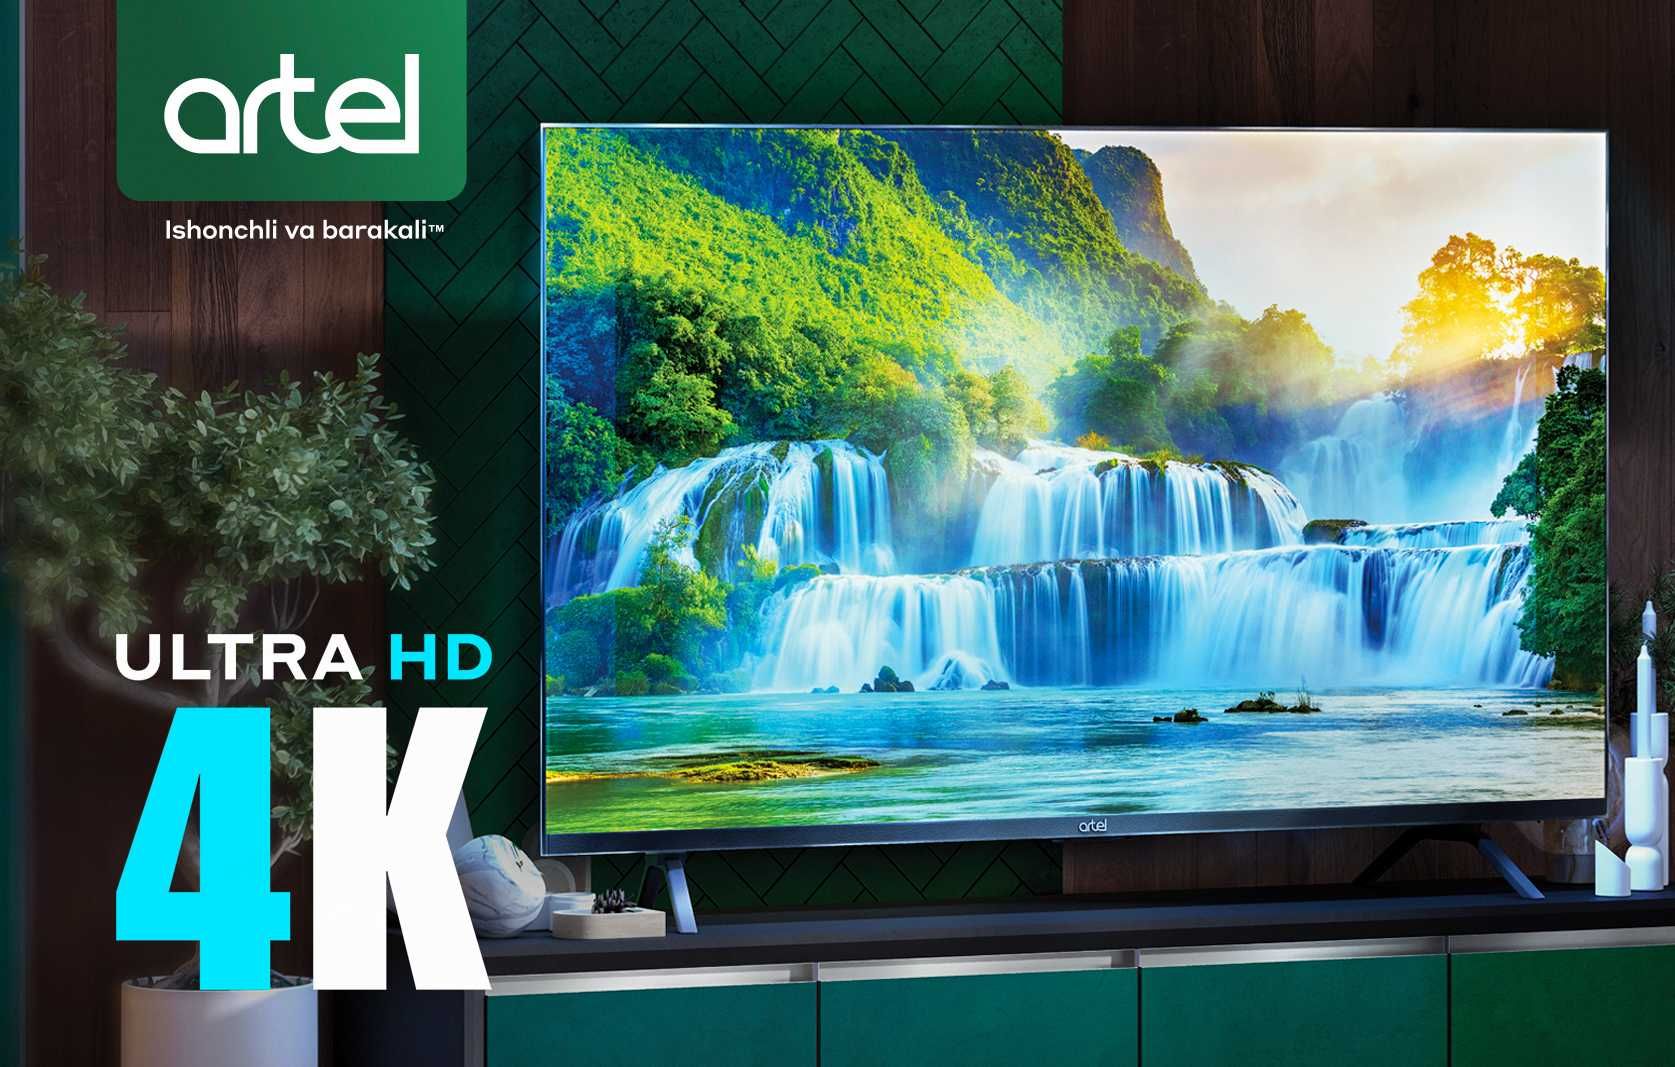 Телевизор NEW ARTEL 55LU8500 4K SMART по Низкой цене+Доставка!!